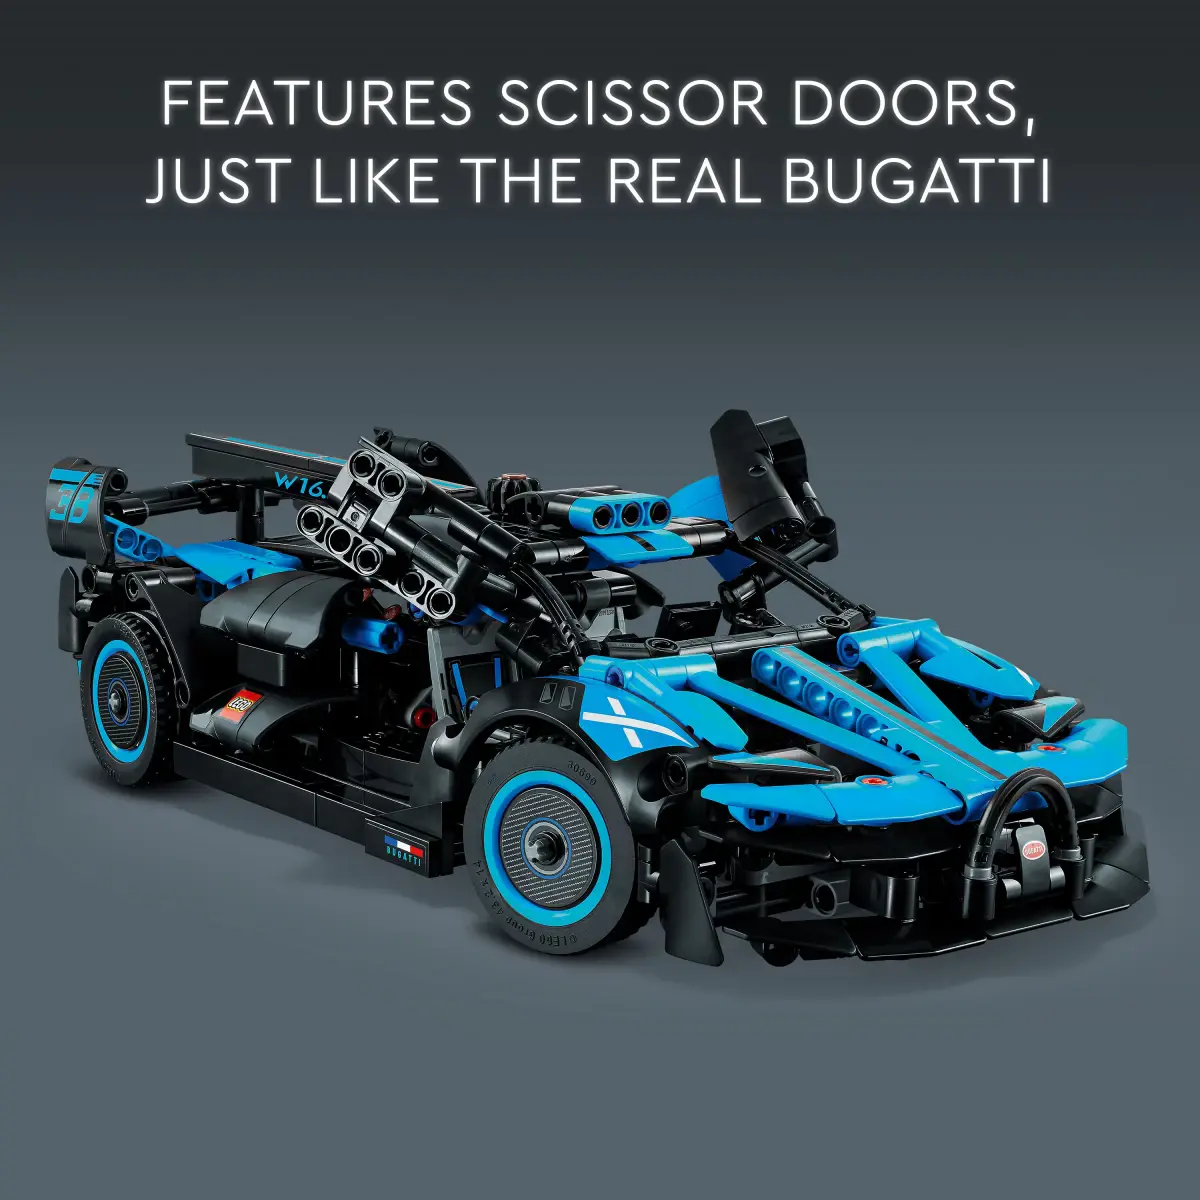 LEGO Technic Bugatti Bolide Agile Blue 42162 Building Toy Set (905 Pieces), Multicolour